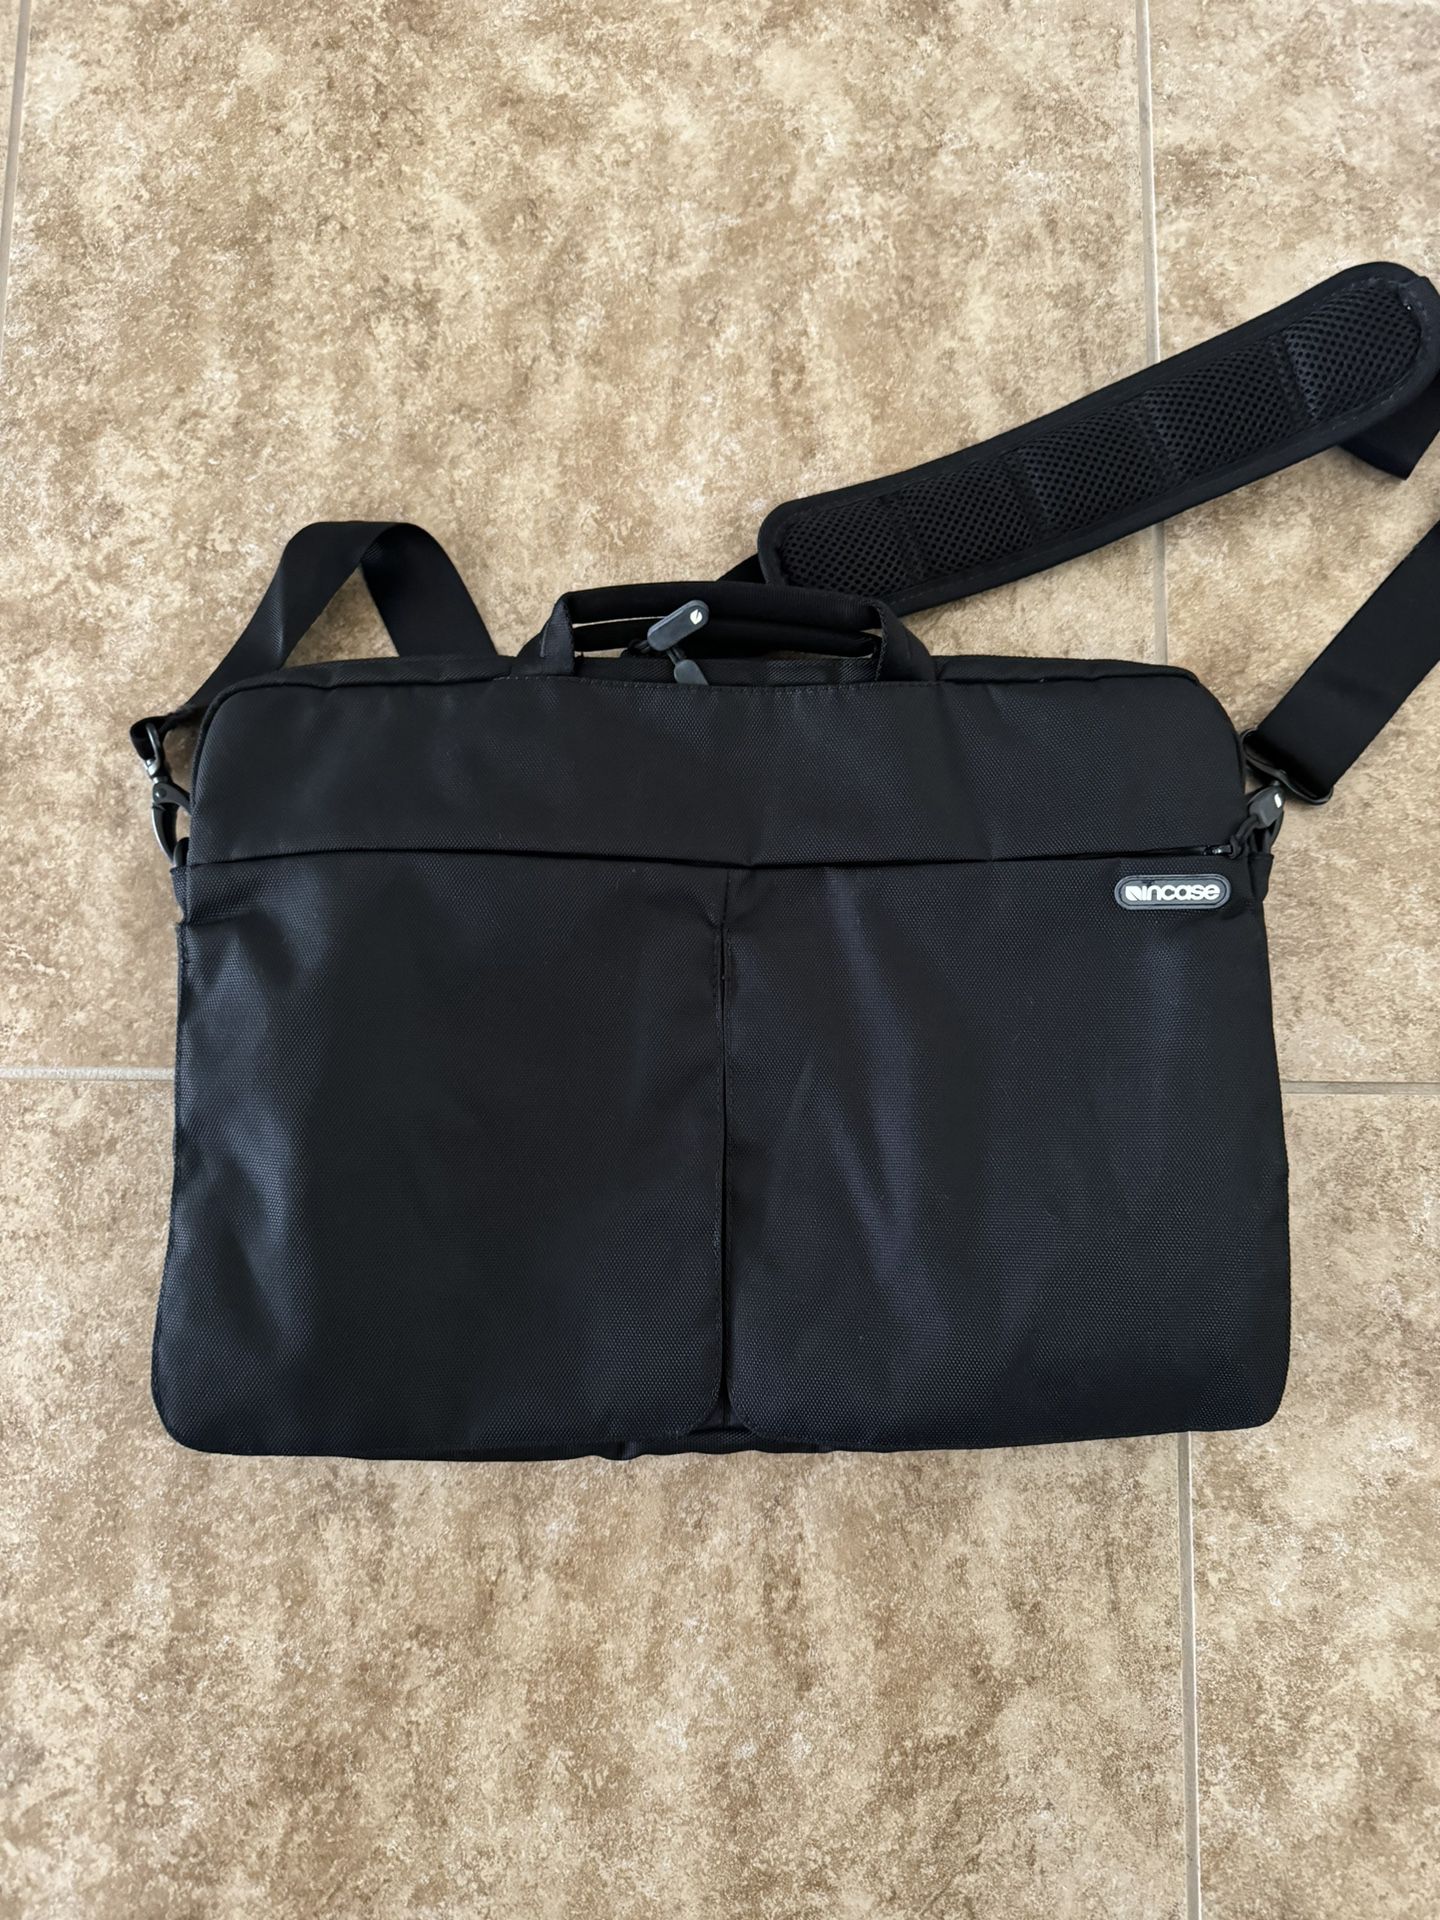 Incase Laptop/Messenger Bag